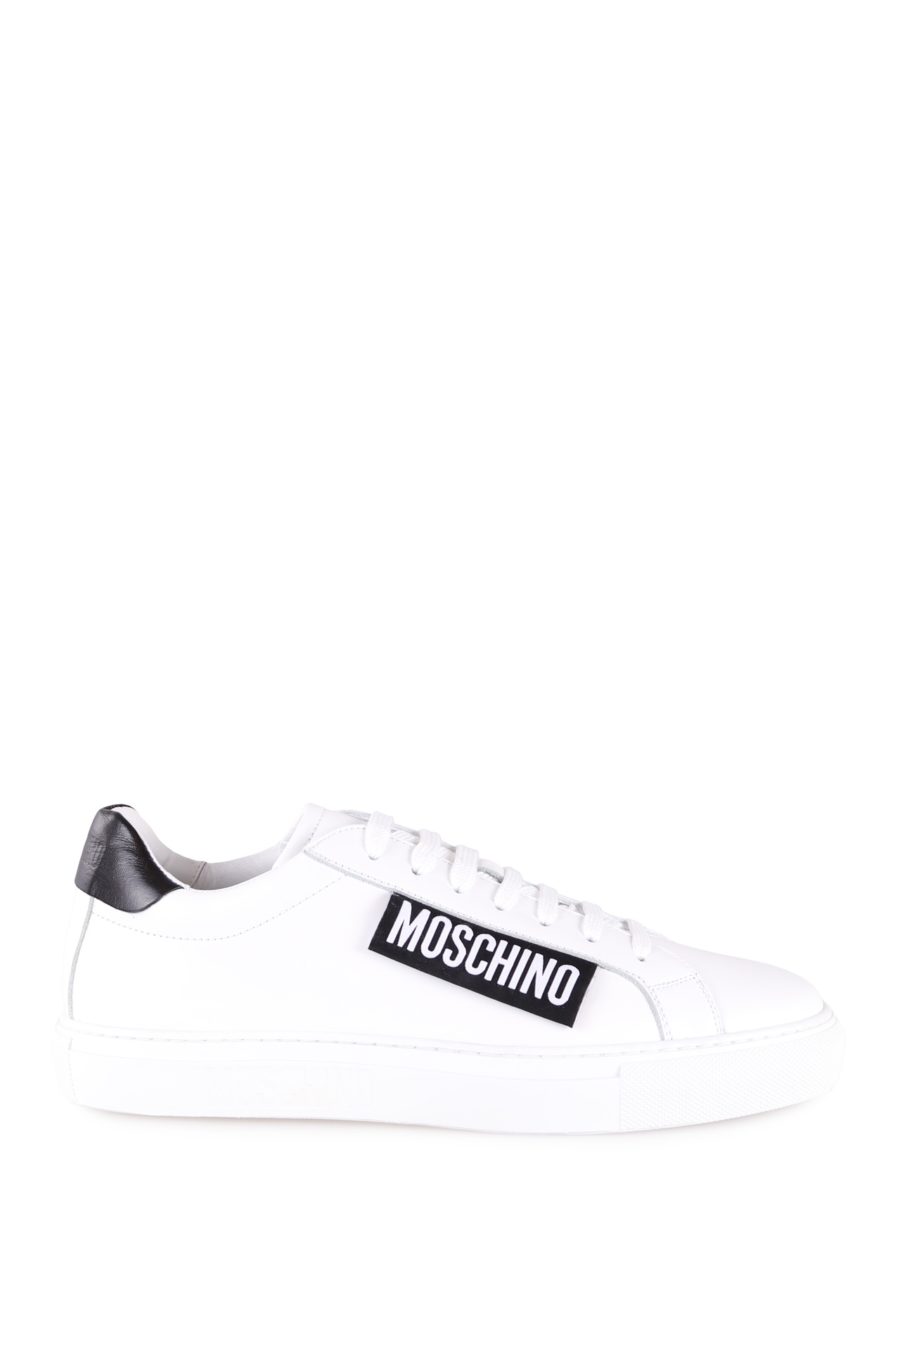 Zapatillas Moschino Couture blancas con logo - bccd00d434f3506999fc281be29a89286cb53253